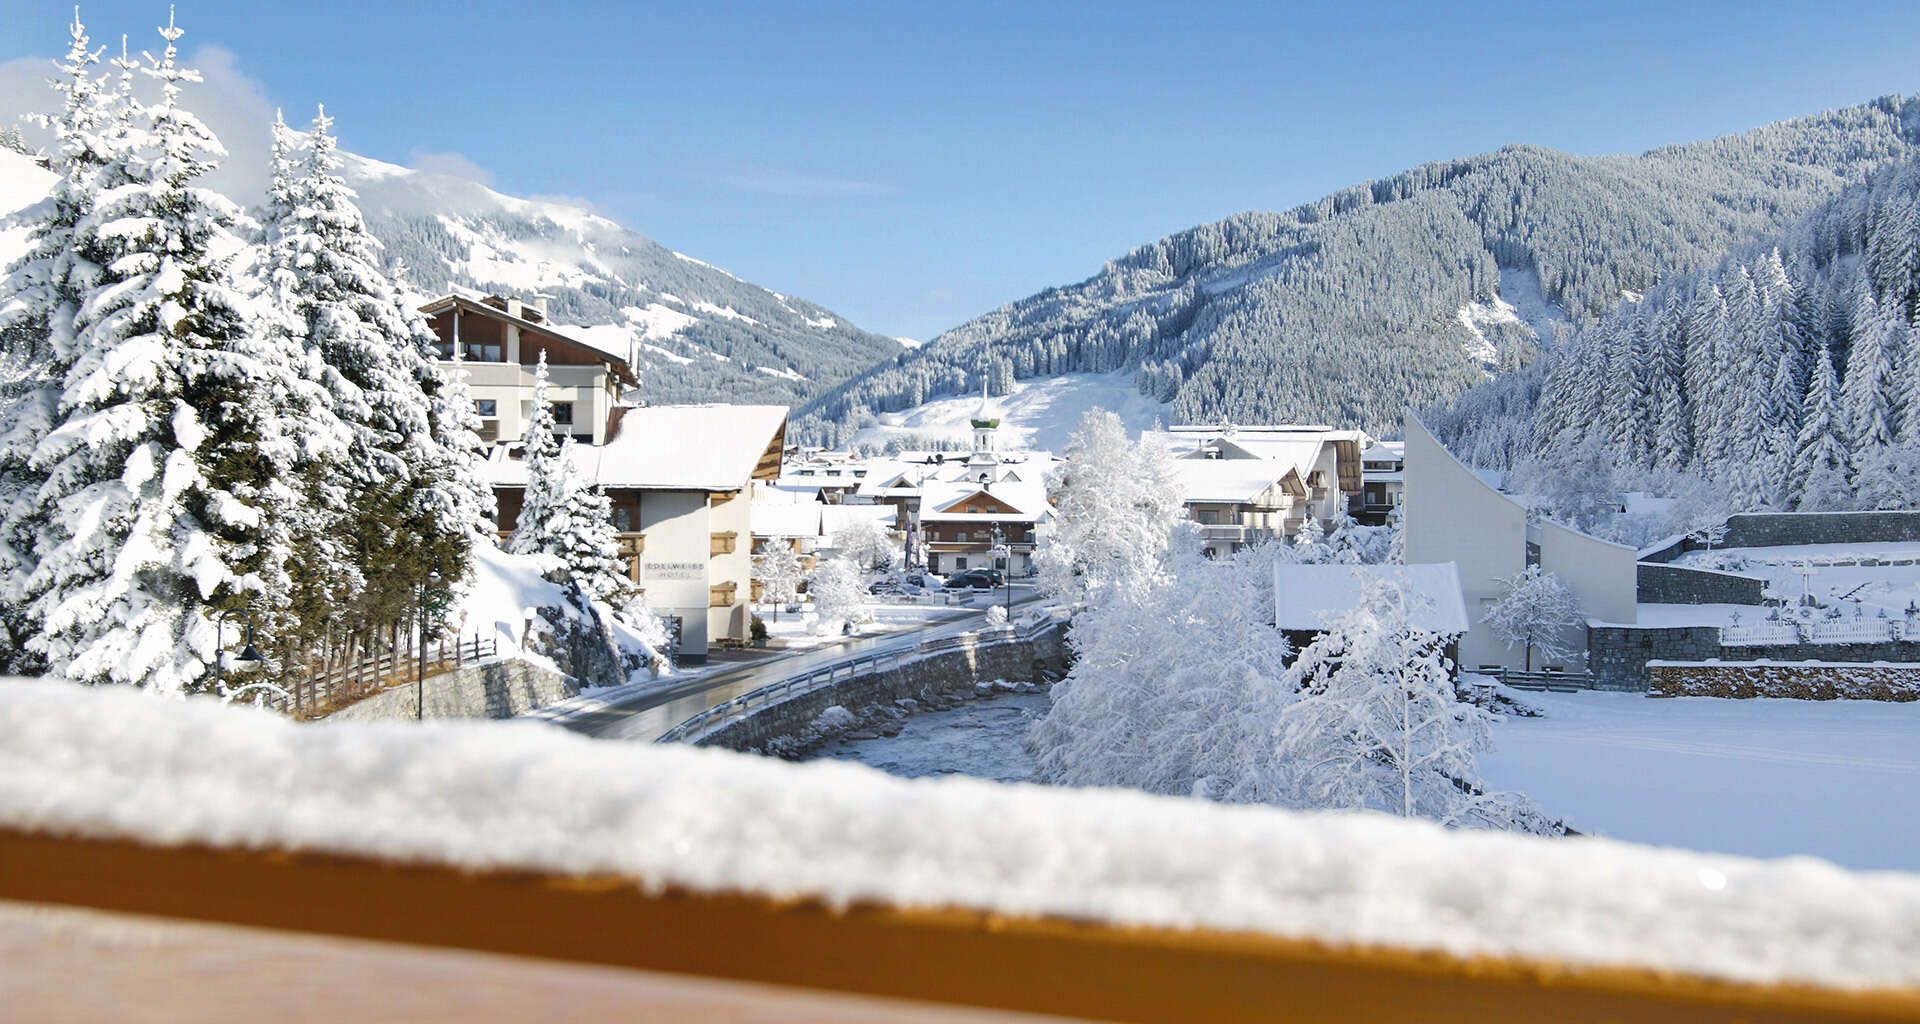 View from the Hotel Alpenherz in Gerlos in winter